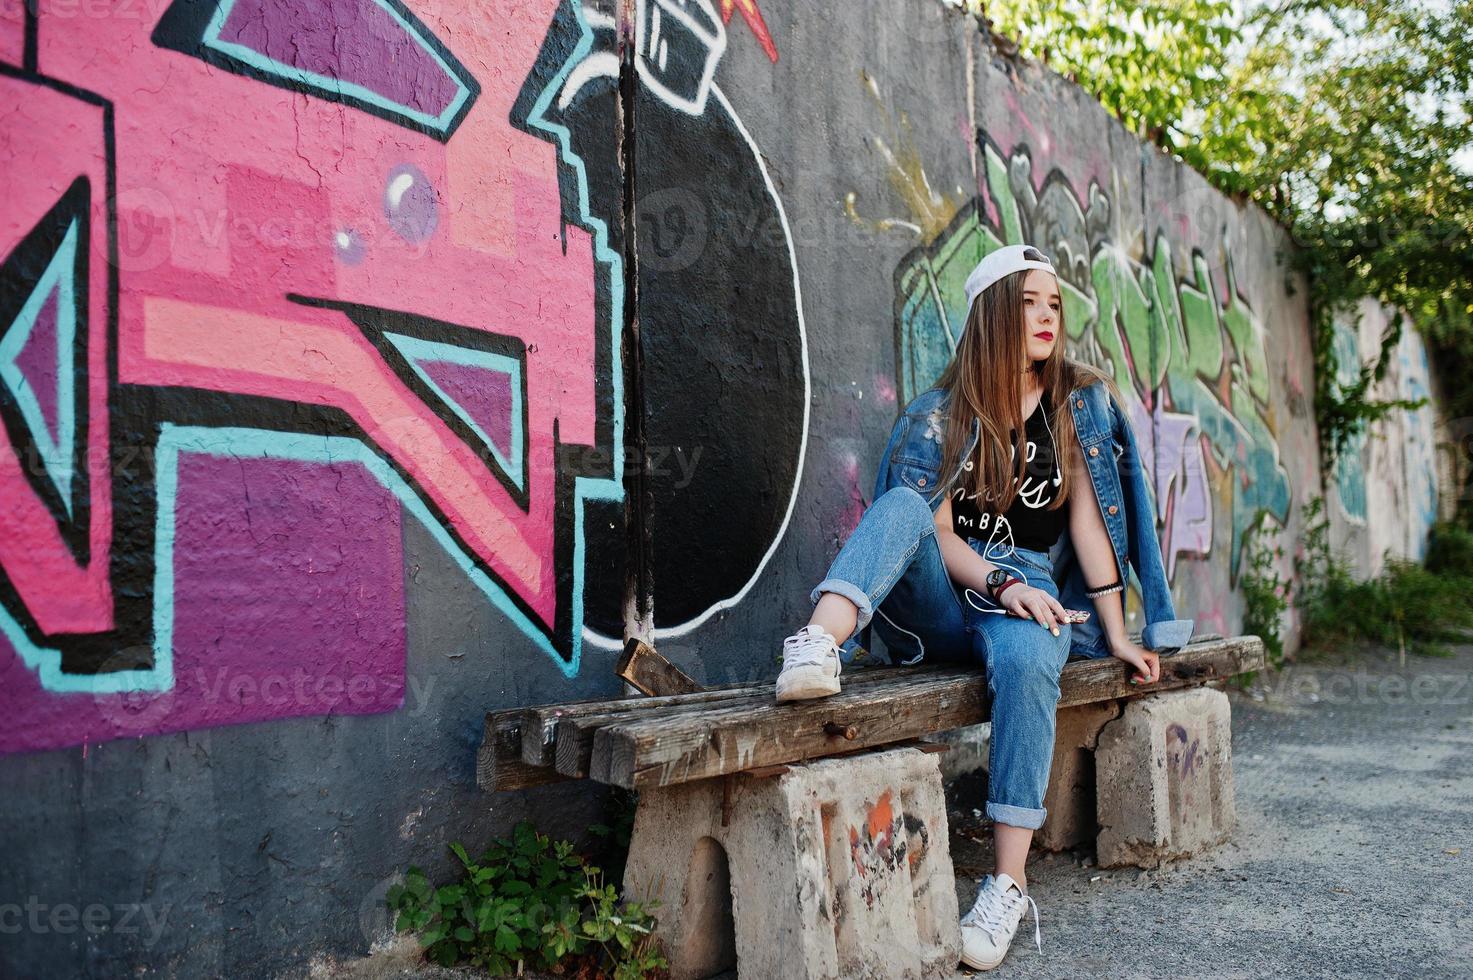 elegante chica hipster casual con gorra y jeans usa música para escuchar desde auriculares de teléfono móvil contra una gran pared de graffiti con bomba. foto